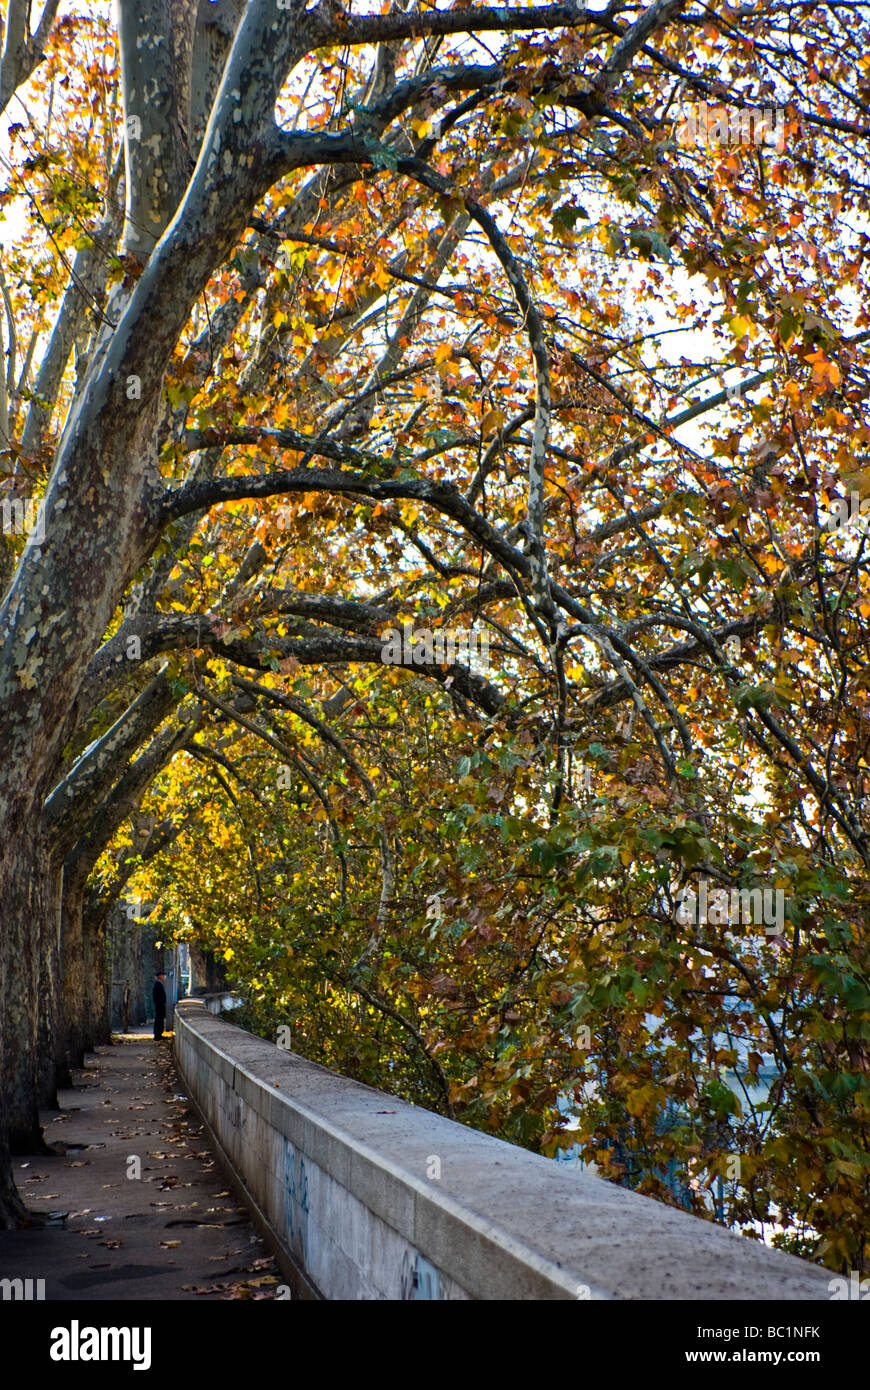 Walkway with Fall Foliage, Rome Italy Stock Photo